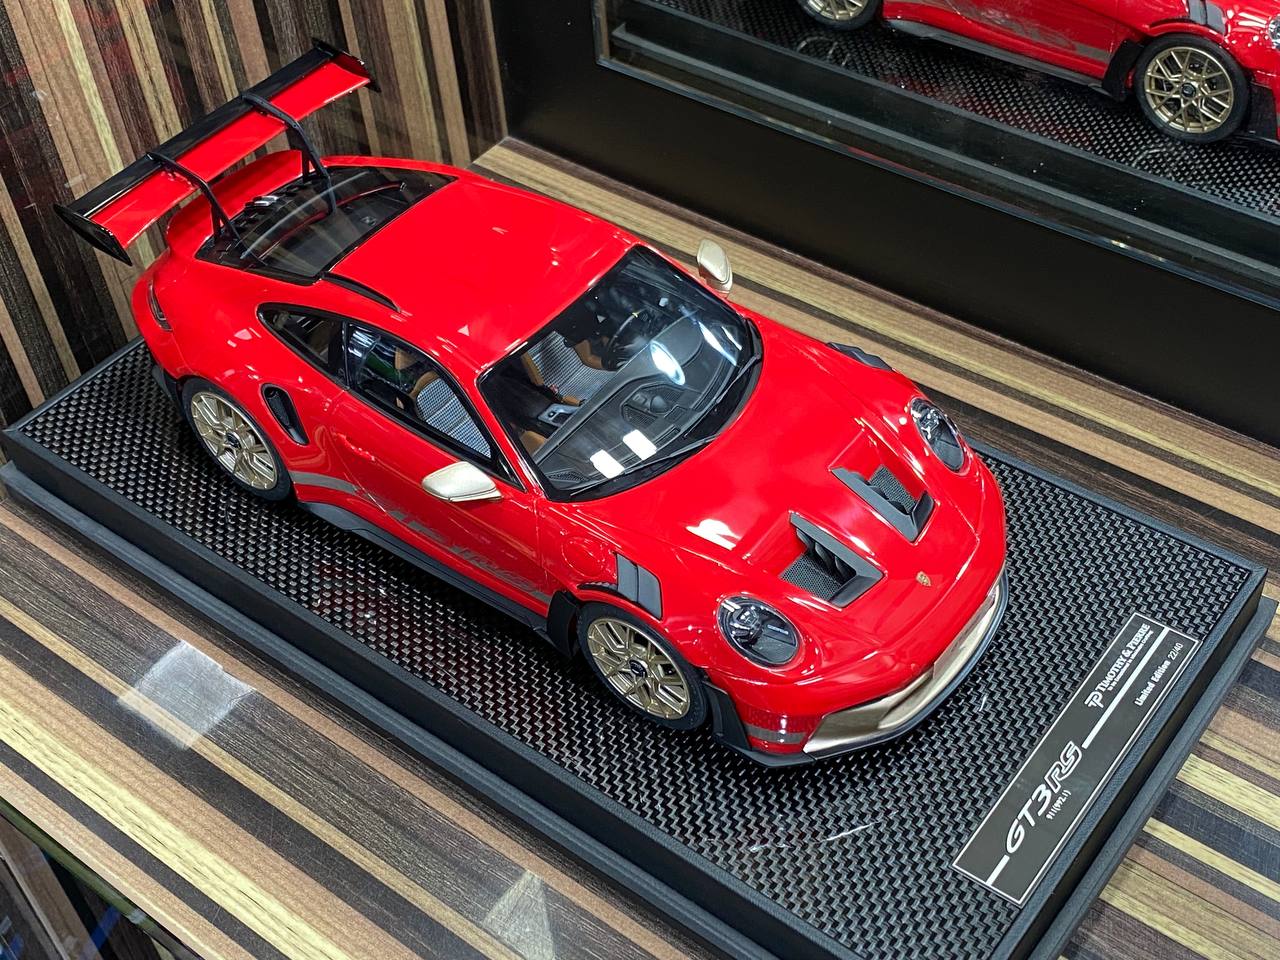 Porsche 911 GT3 RS 992.1 Gold Wheels Red by Timothy & Pierre|Sold in Dturman.com Dubai UAE.